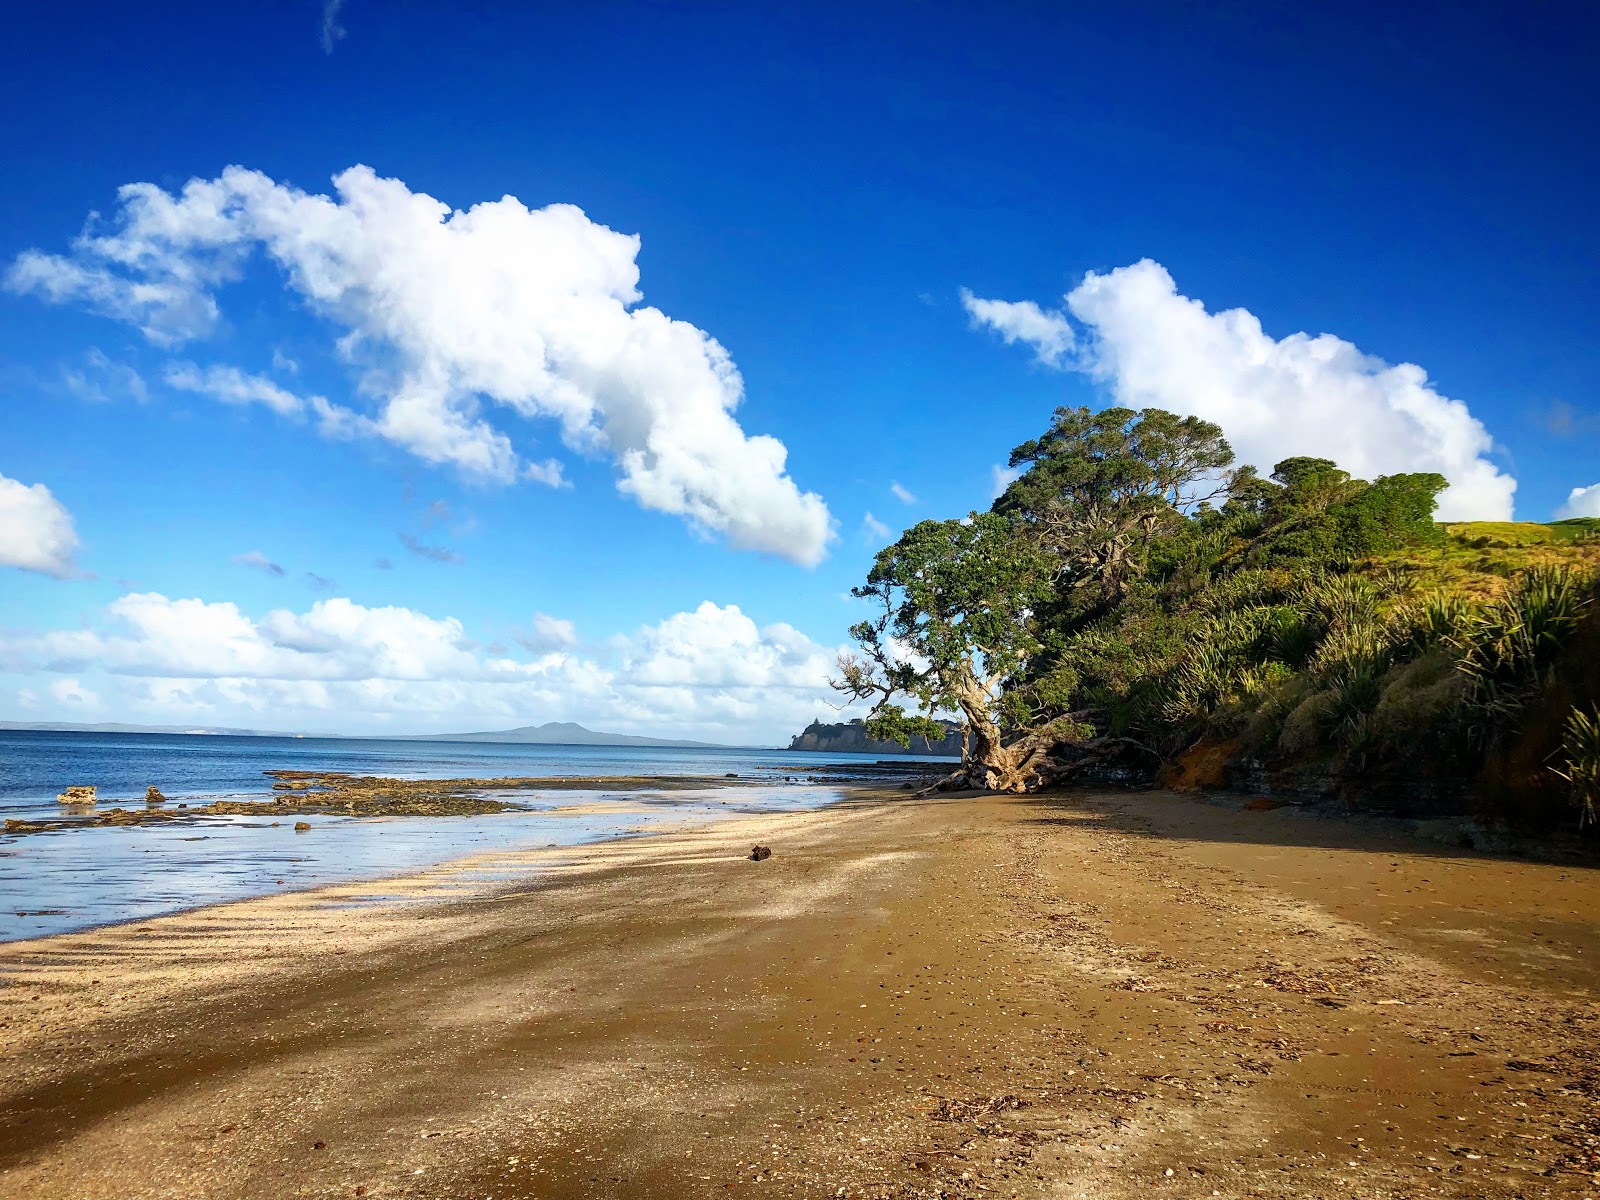 Fotografija Pohutukawa Bay Beach nahaja se v naravnem okolju